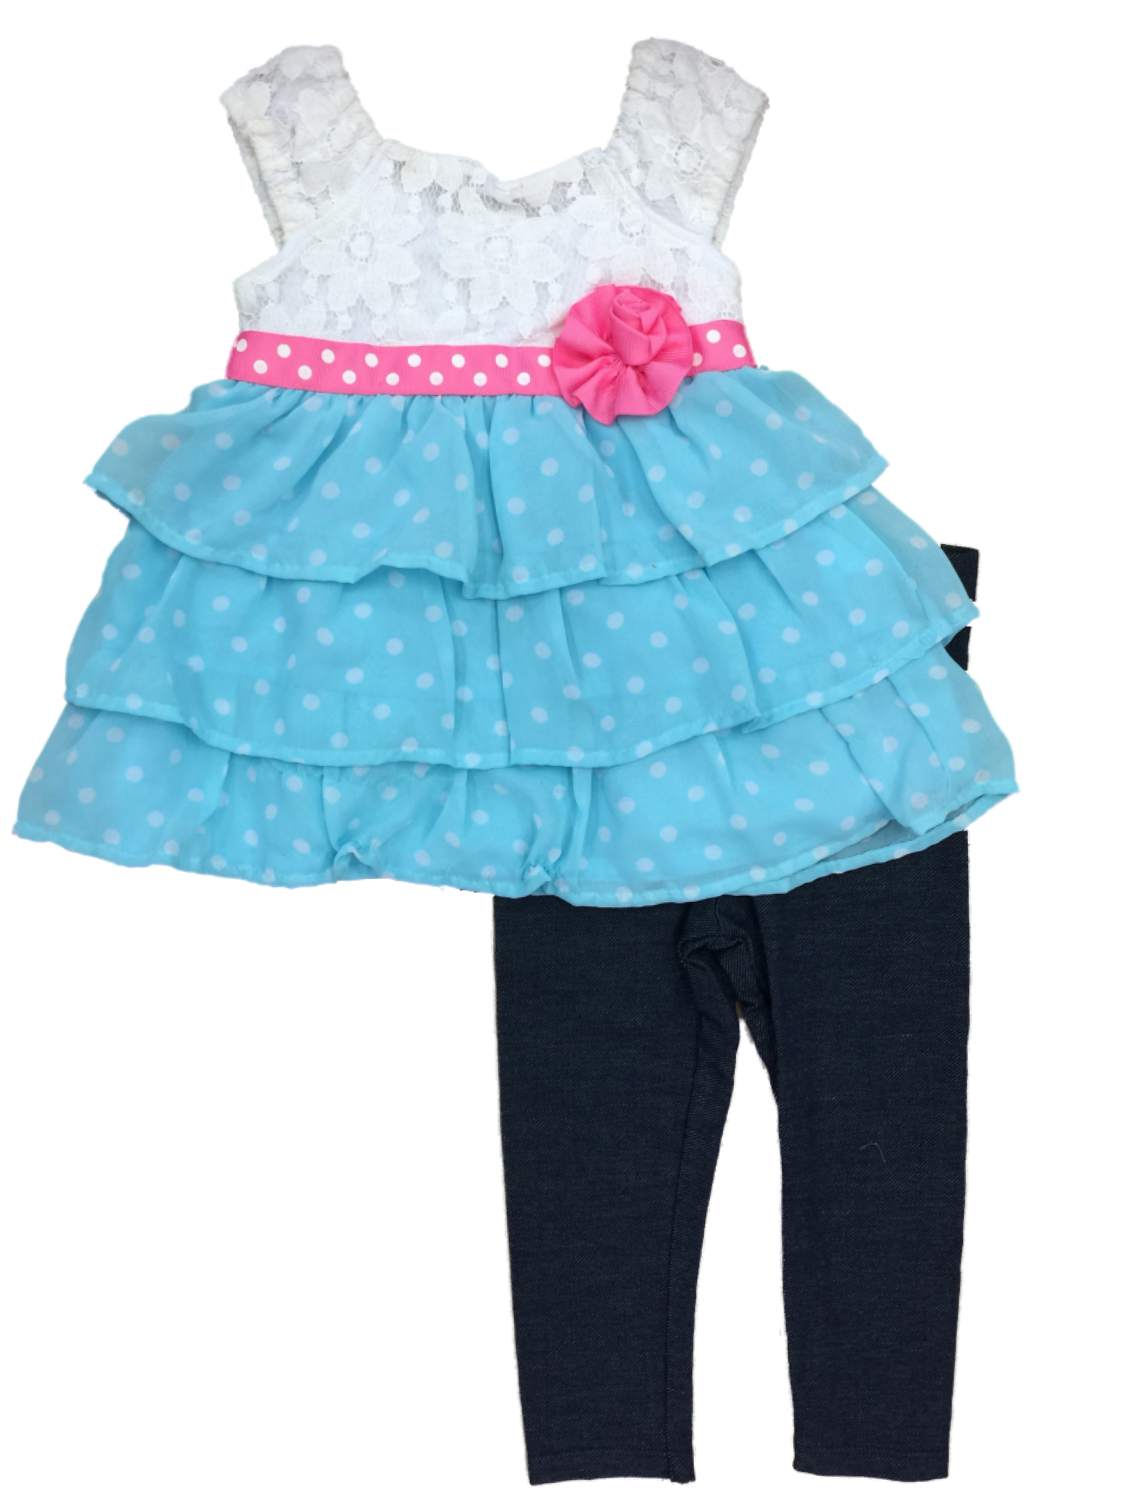 Youngland Infant Girls Baby Outfit Blue & White Ruffle Polka Dot Shirt & Jeggings Set 24m